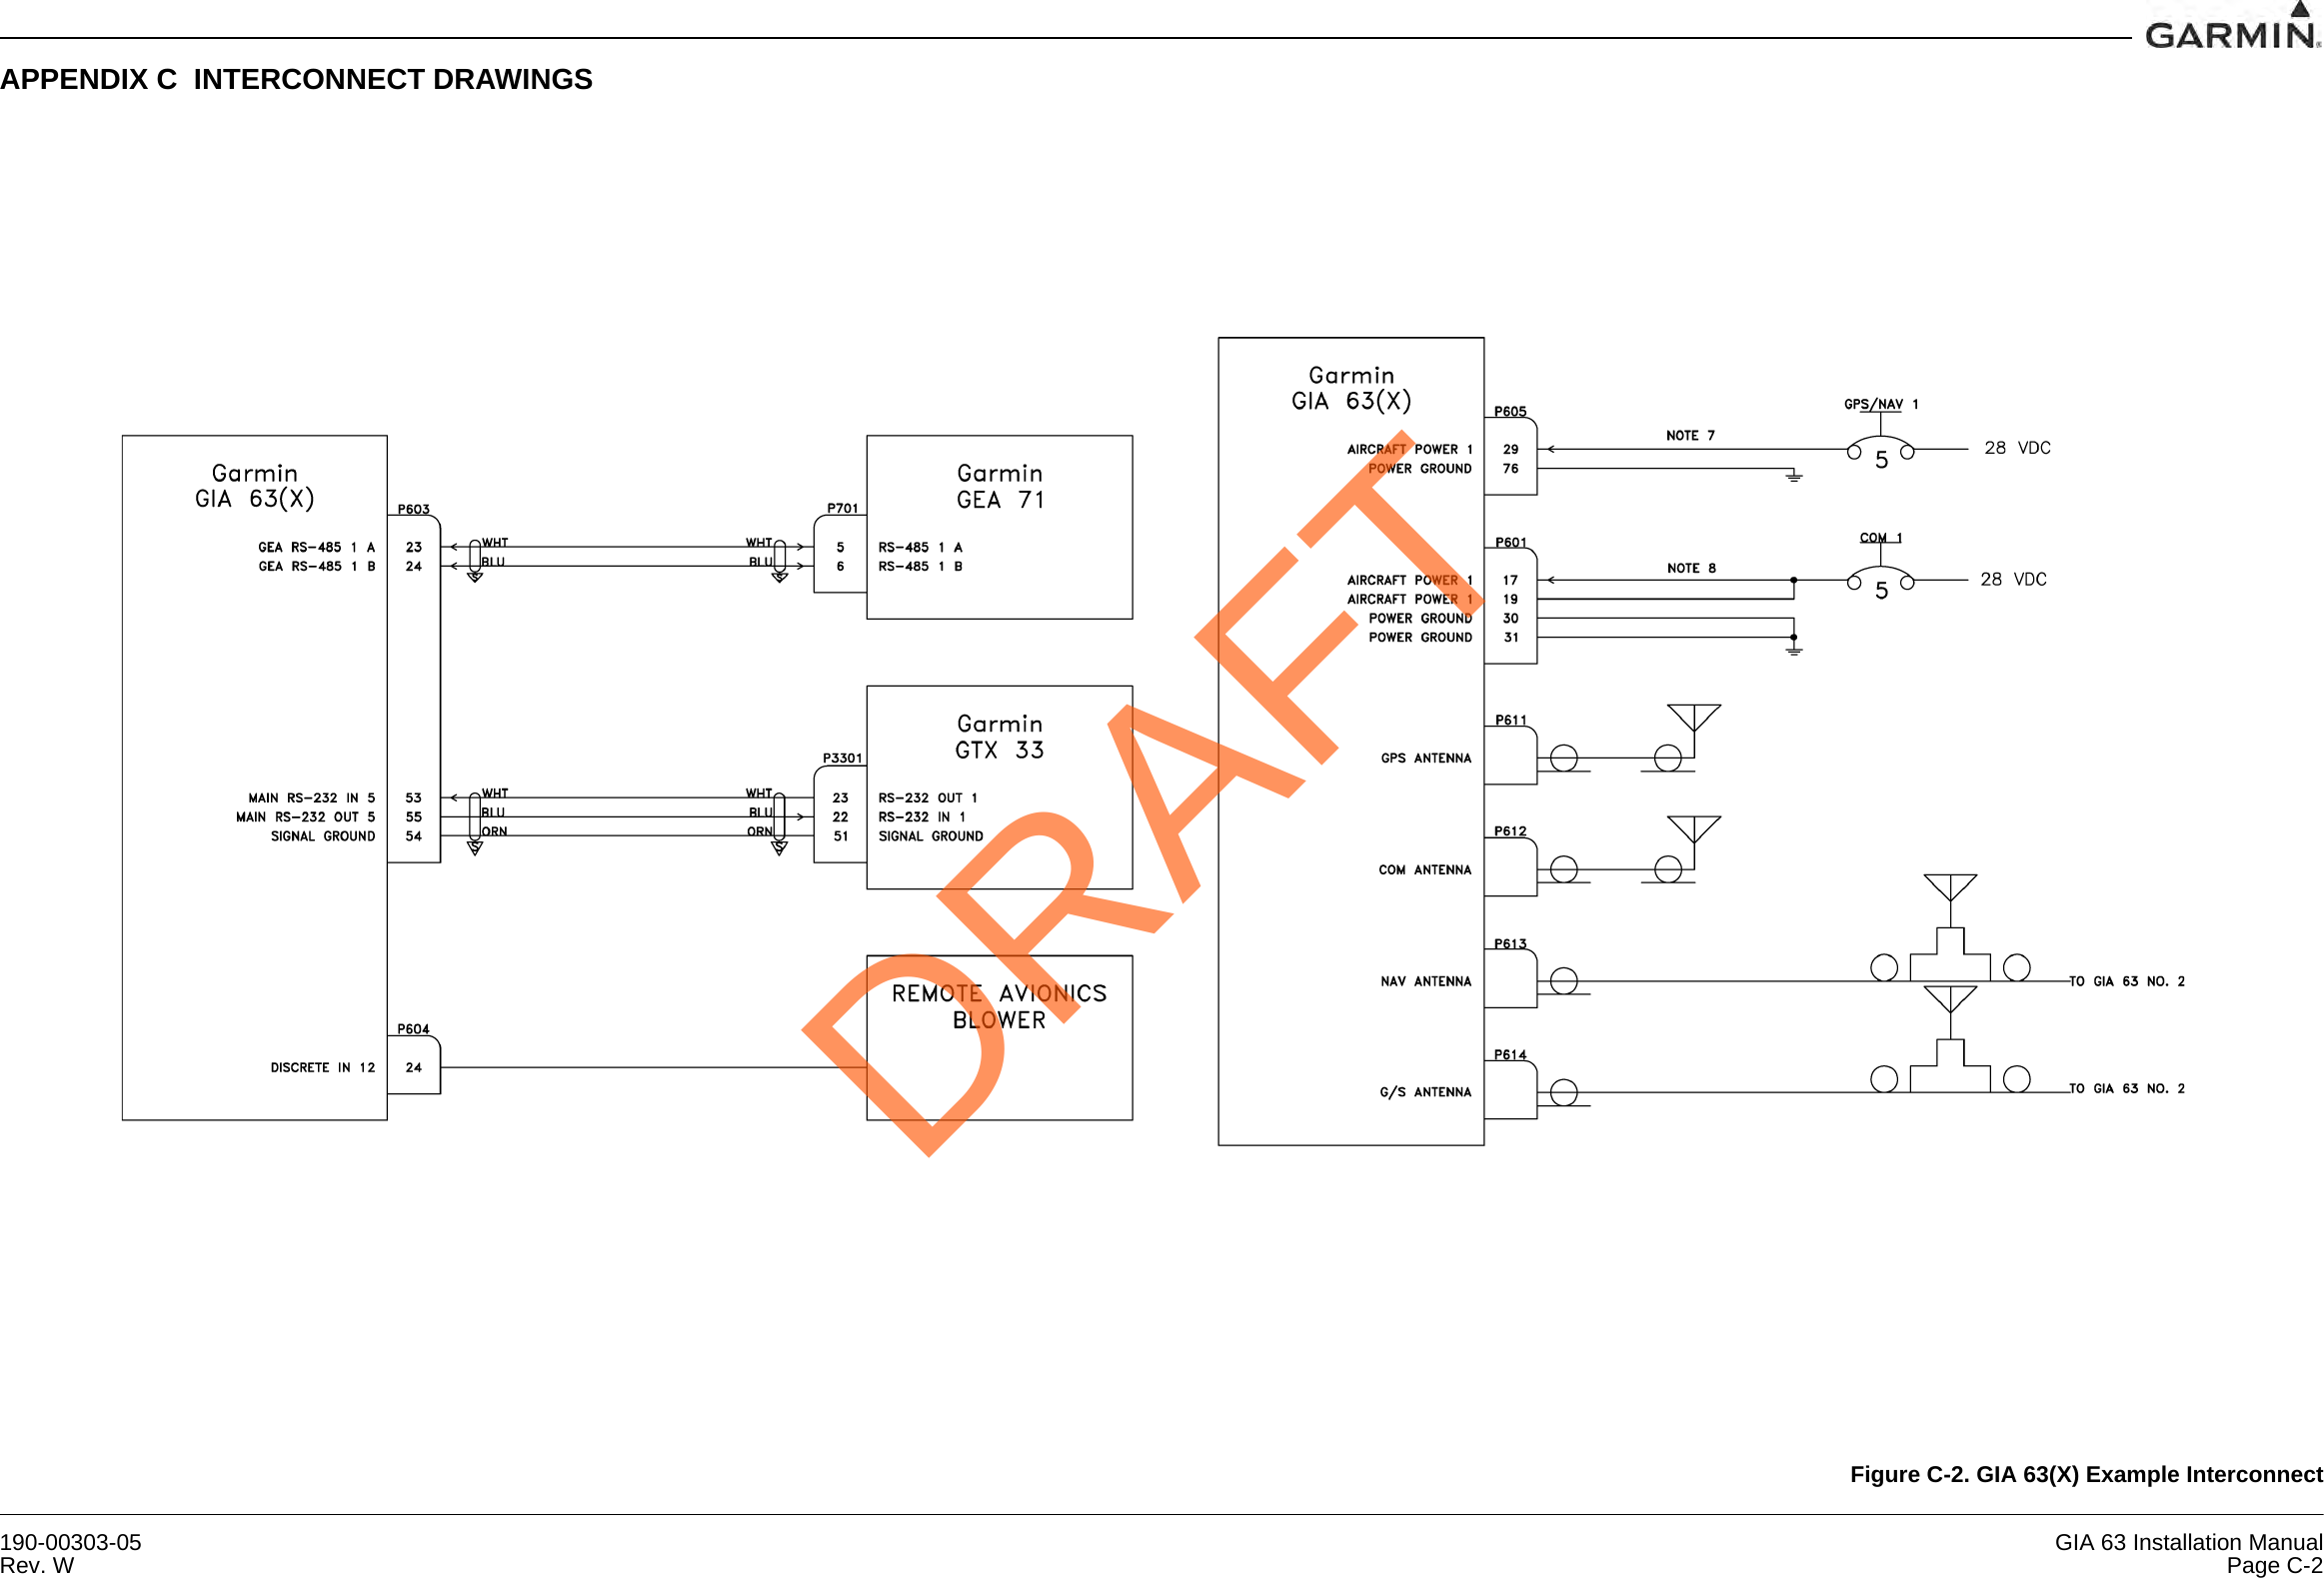 190-00303-05 GIA 63 Installation ManualRev. W Page C-2APPENDIX C  INTERCONNECT DRAWINGSFigure C-2. GIA 63(X) Example InterconnectDRAFT